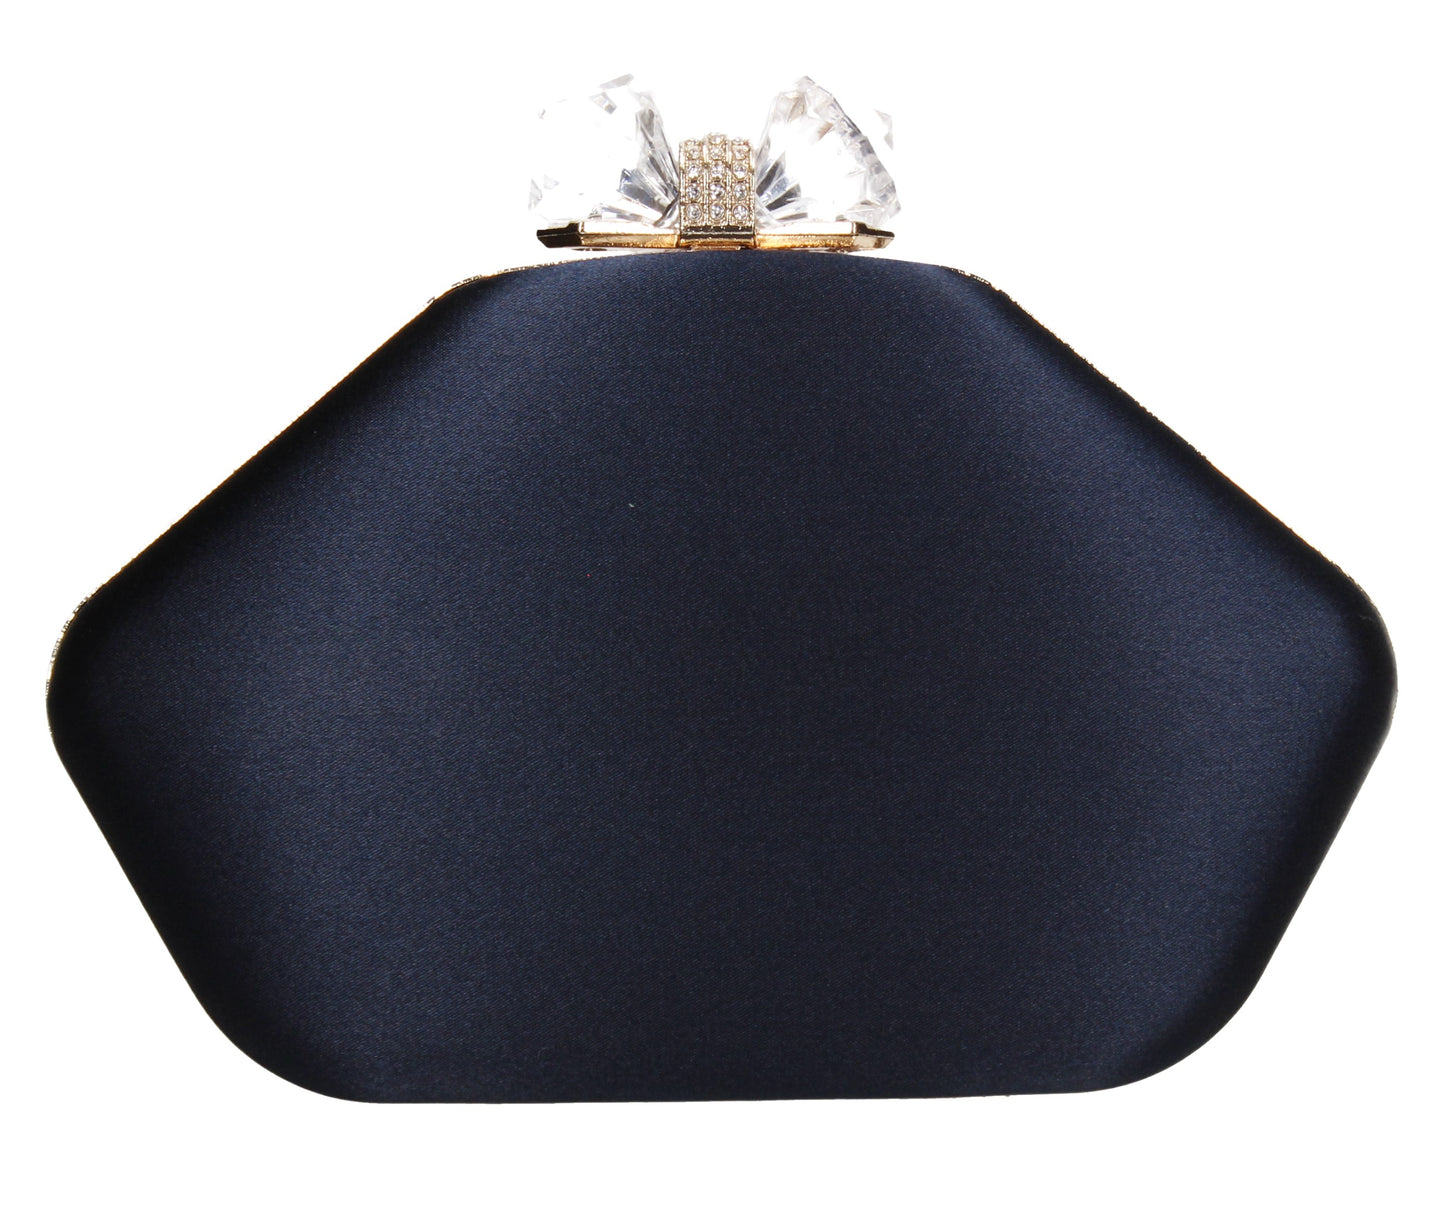 SWANKYSWANS Karie Clutch Bag Navy Blue Cute Cheap Clutch Bag For Weddings School and Work